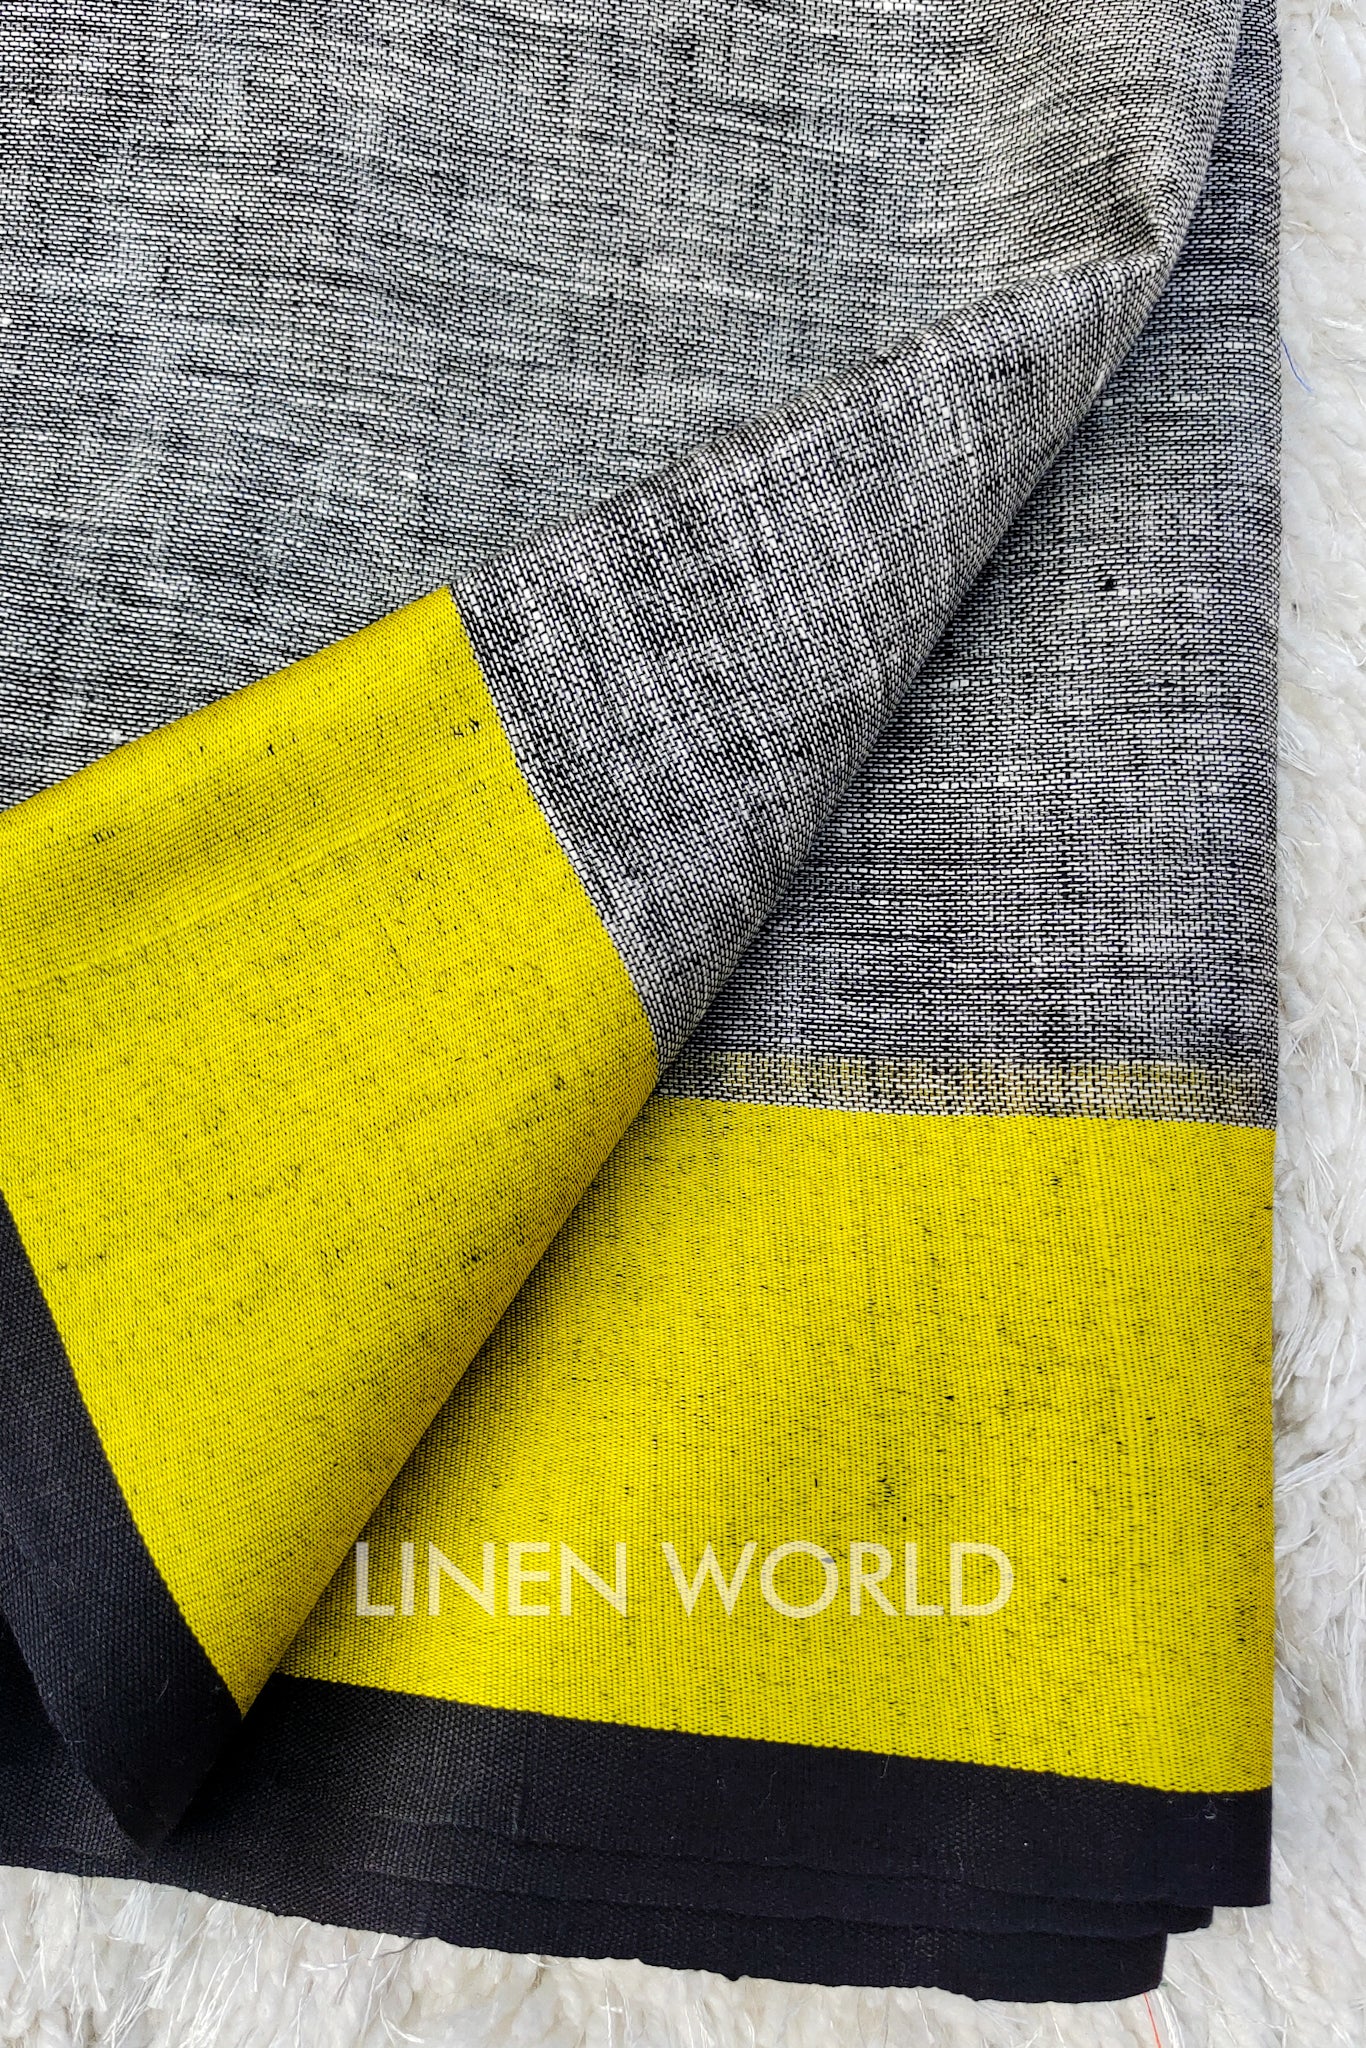 taashi - grey organic linen saree - linenworldonline.in